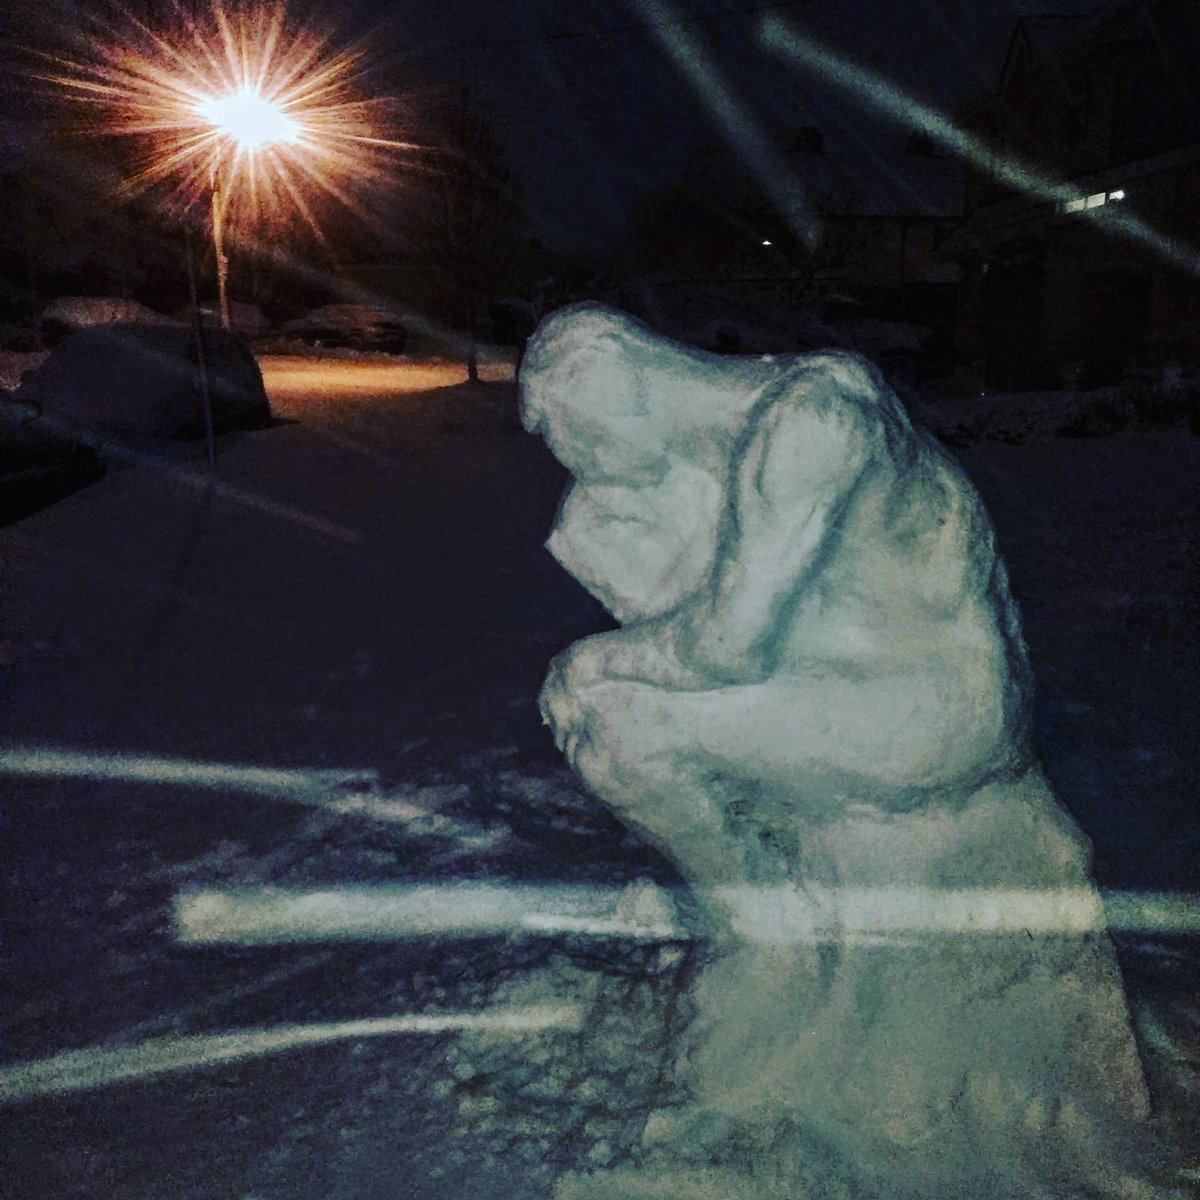 Snowman 'The Thinker' by @MonikaFerris #snowman #thethinker  #snowsculpture #WhatsOn #StormEmma #Dublin #cabinteely #augustrodine #snowgoals #art  #sculpture